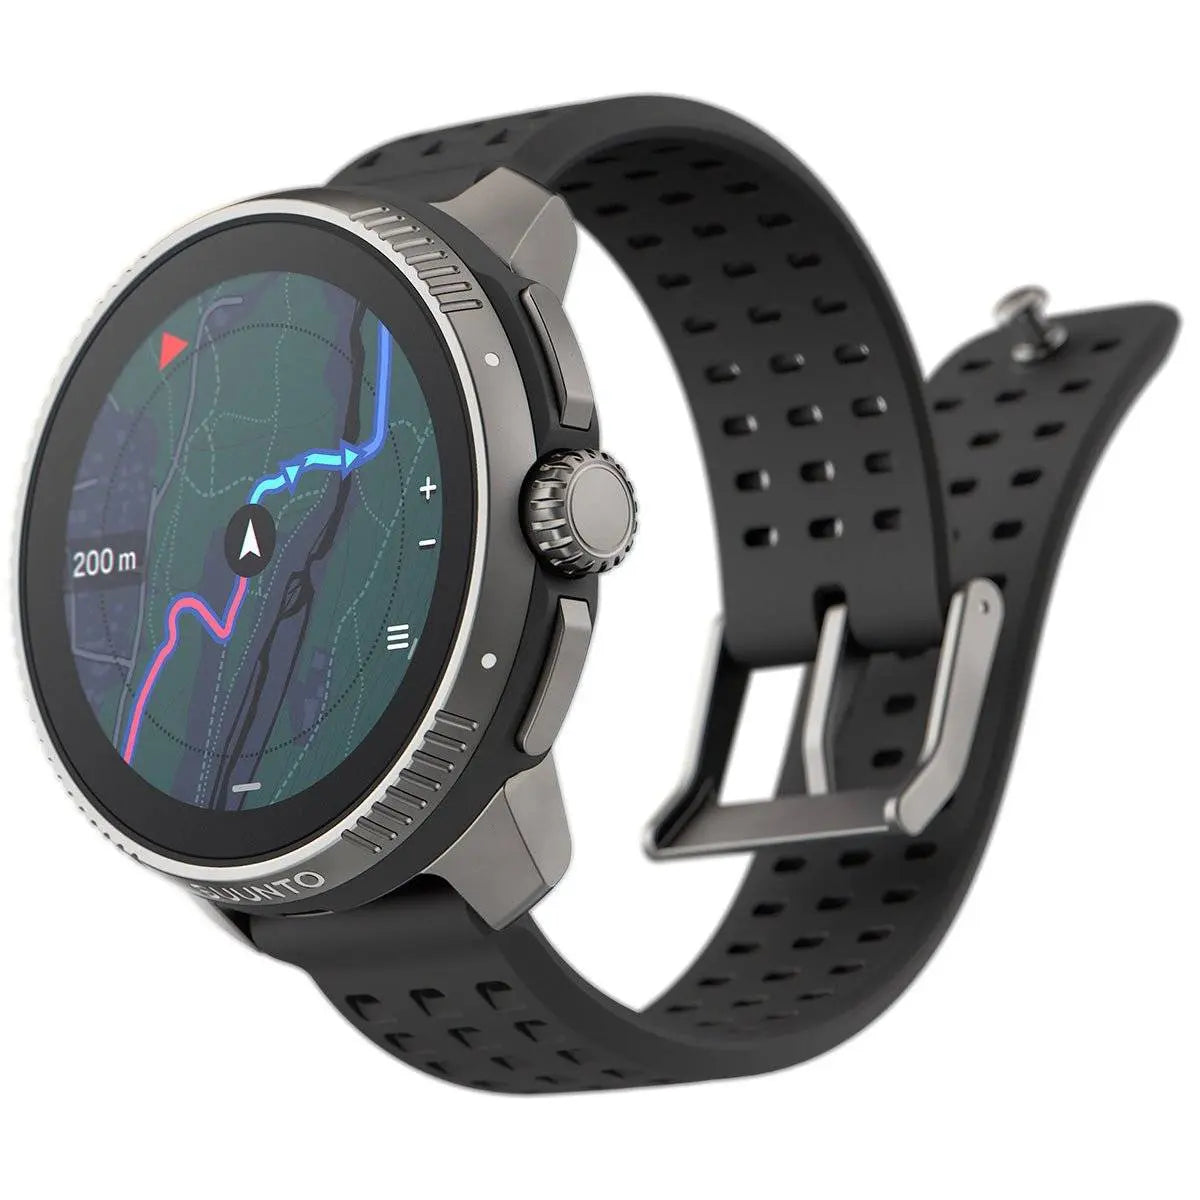 Suunto Race Titanium Charcoal GPS Watch